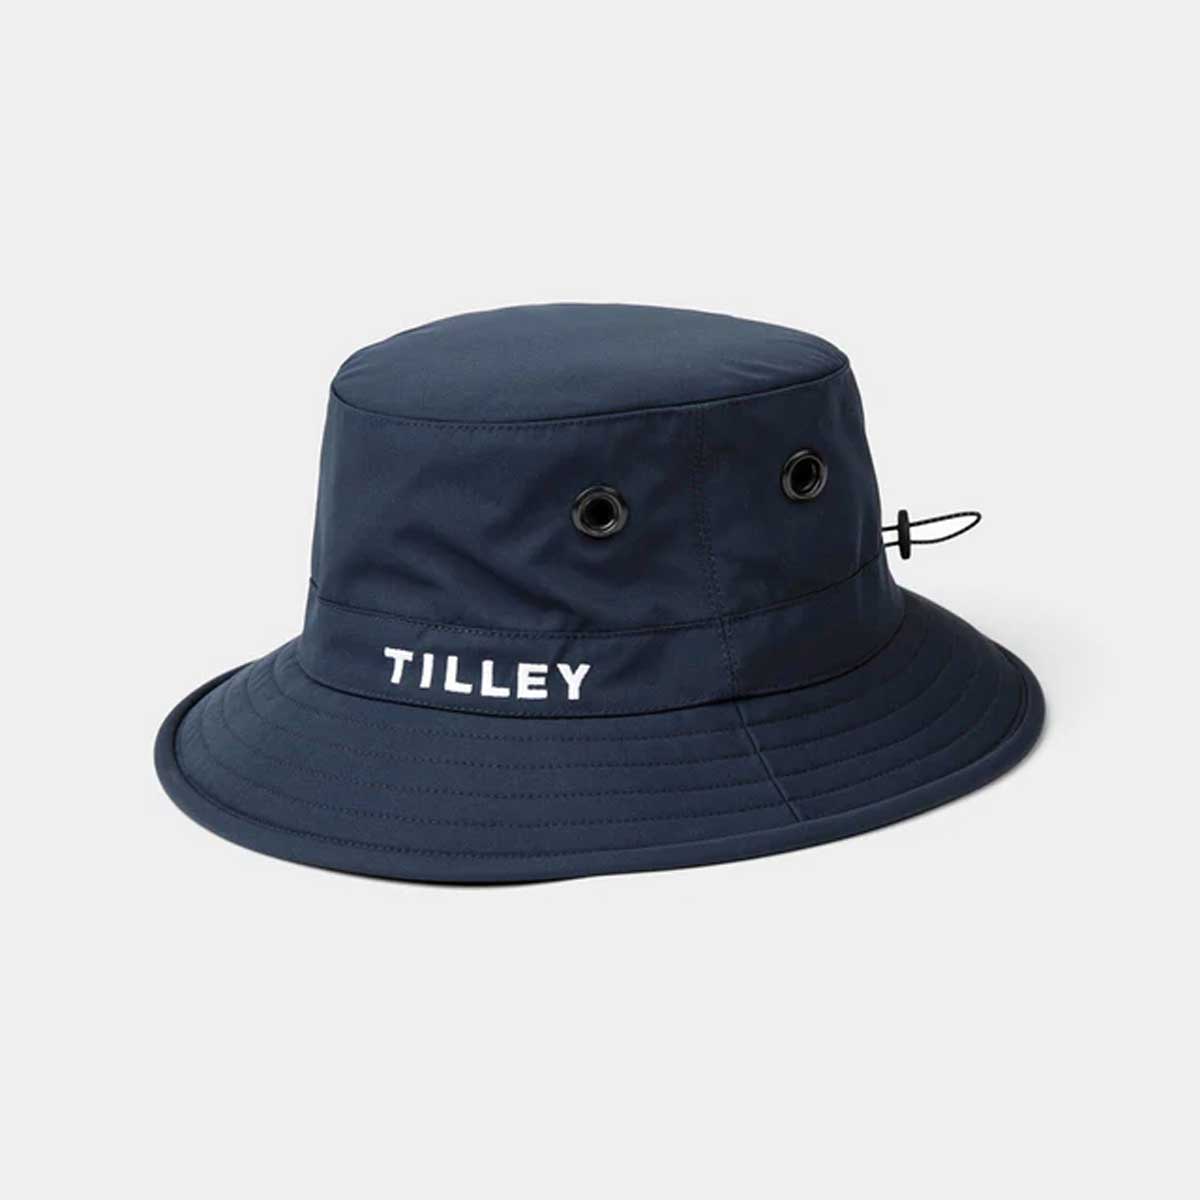 TILLEY Golf Bucket Hat - Dark Navy